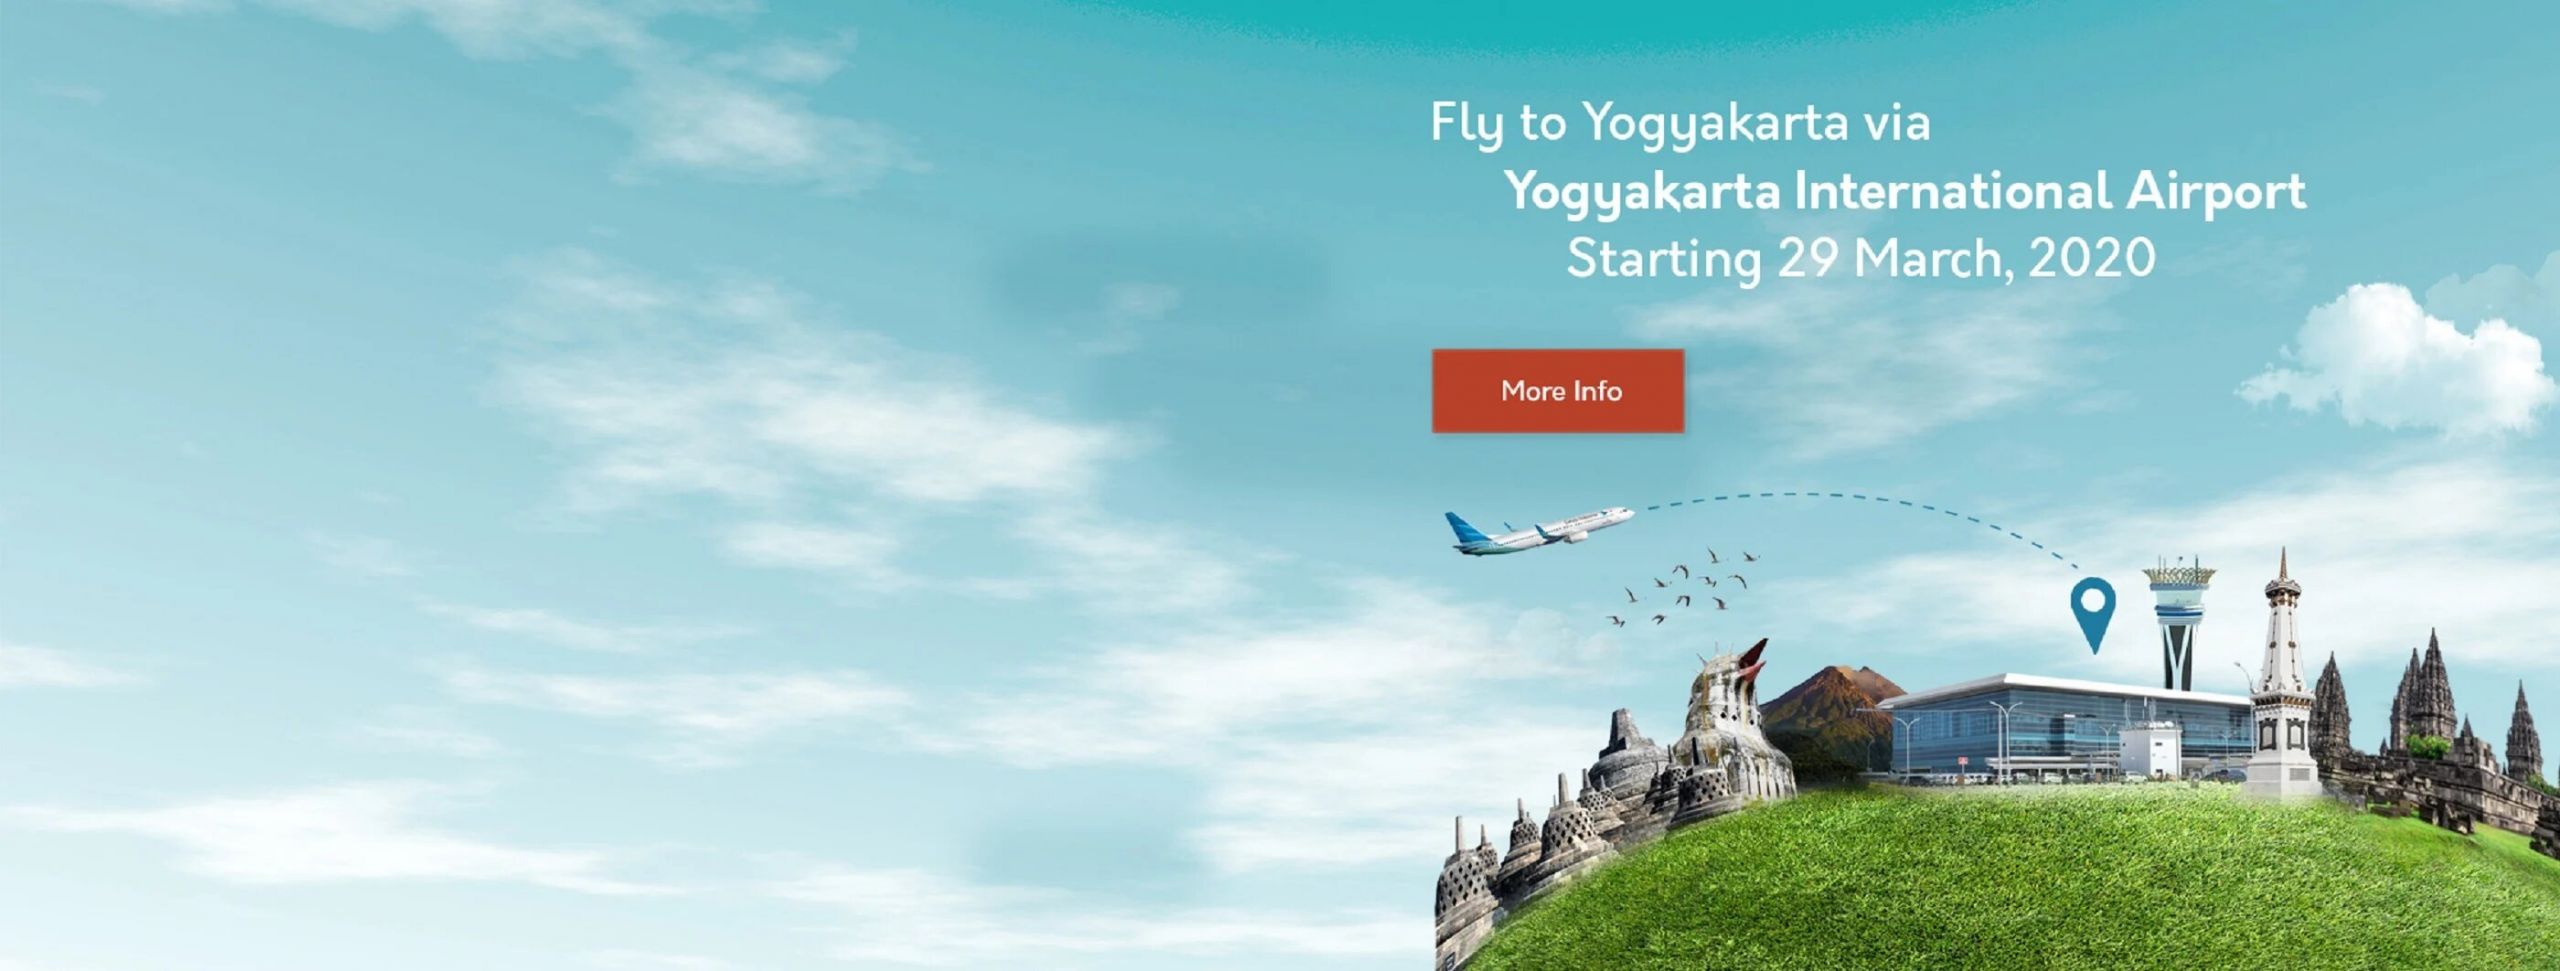 Le Jardin Des Plantes Voglans Frais the Airlines Of Garuda Indonesia Garuda Indonesia